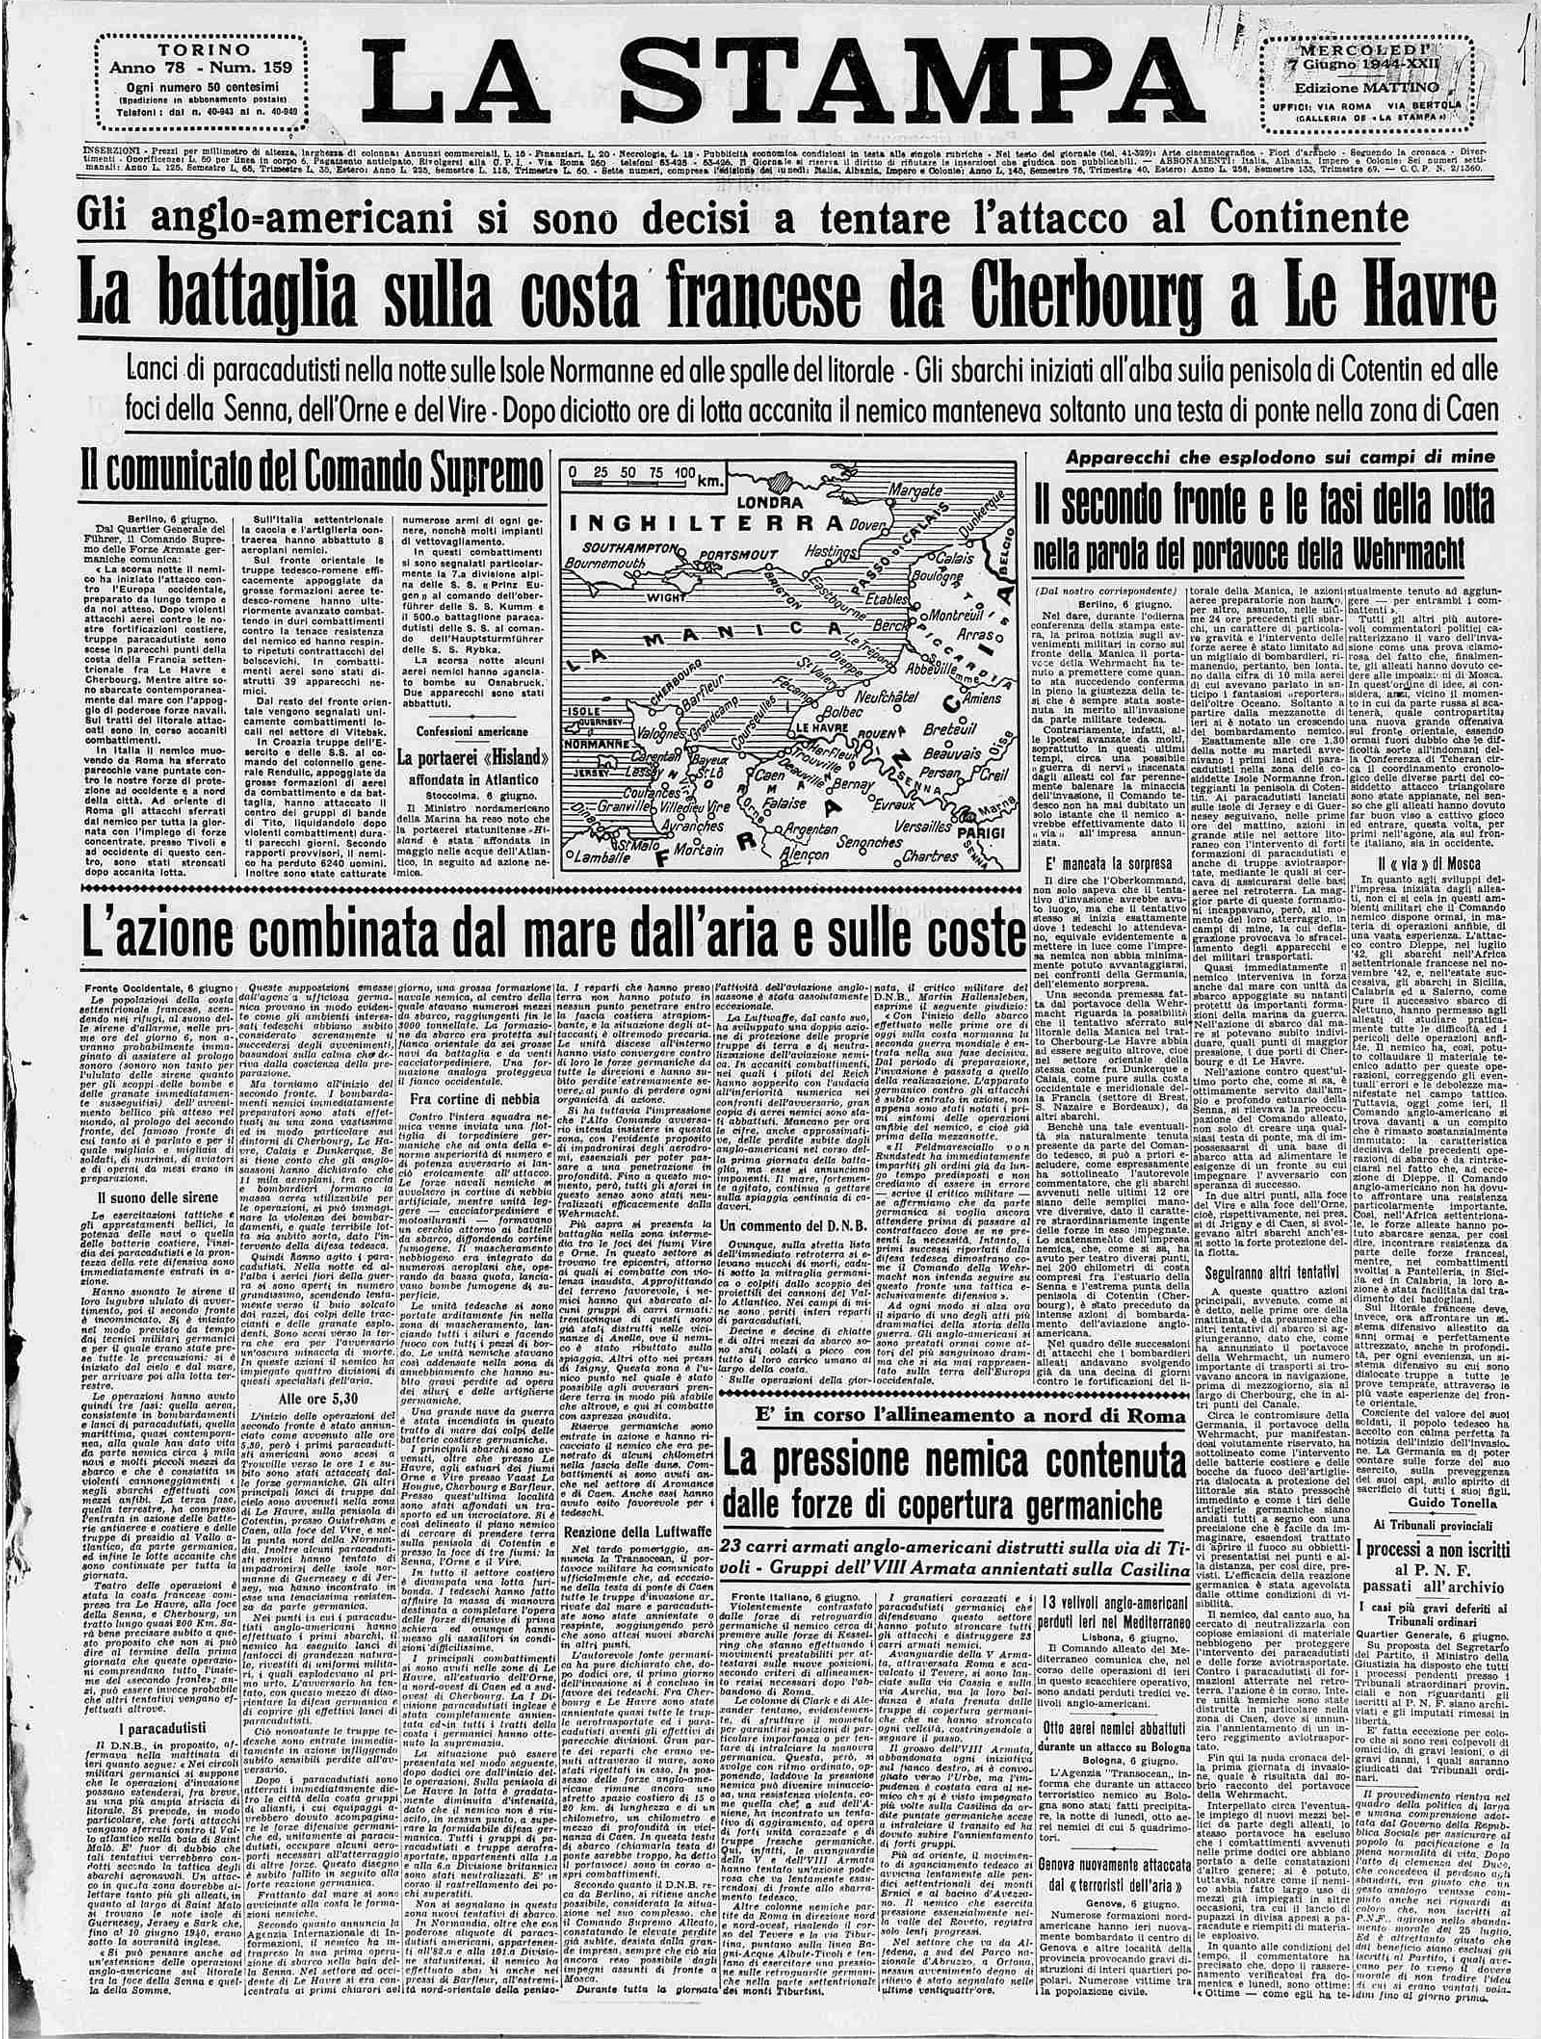 La Stampa 6 June 1944